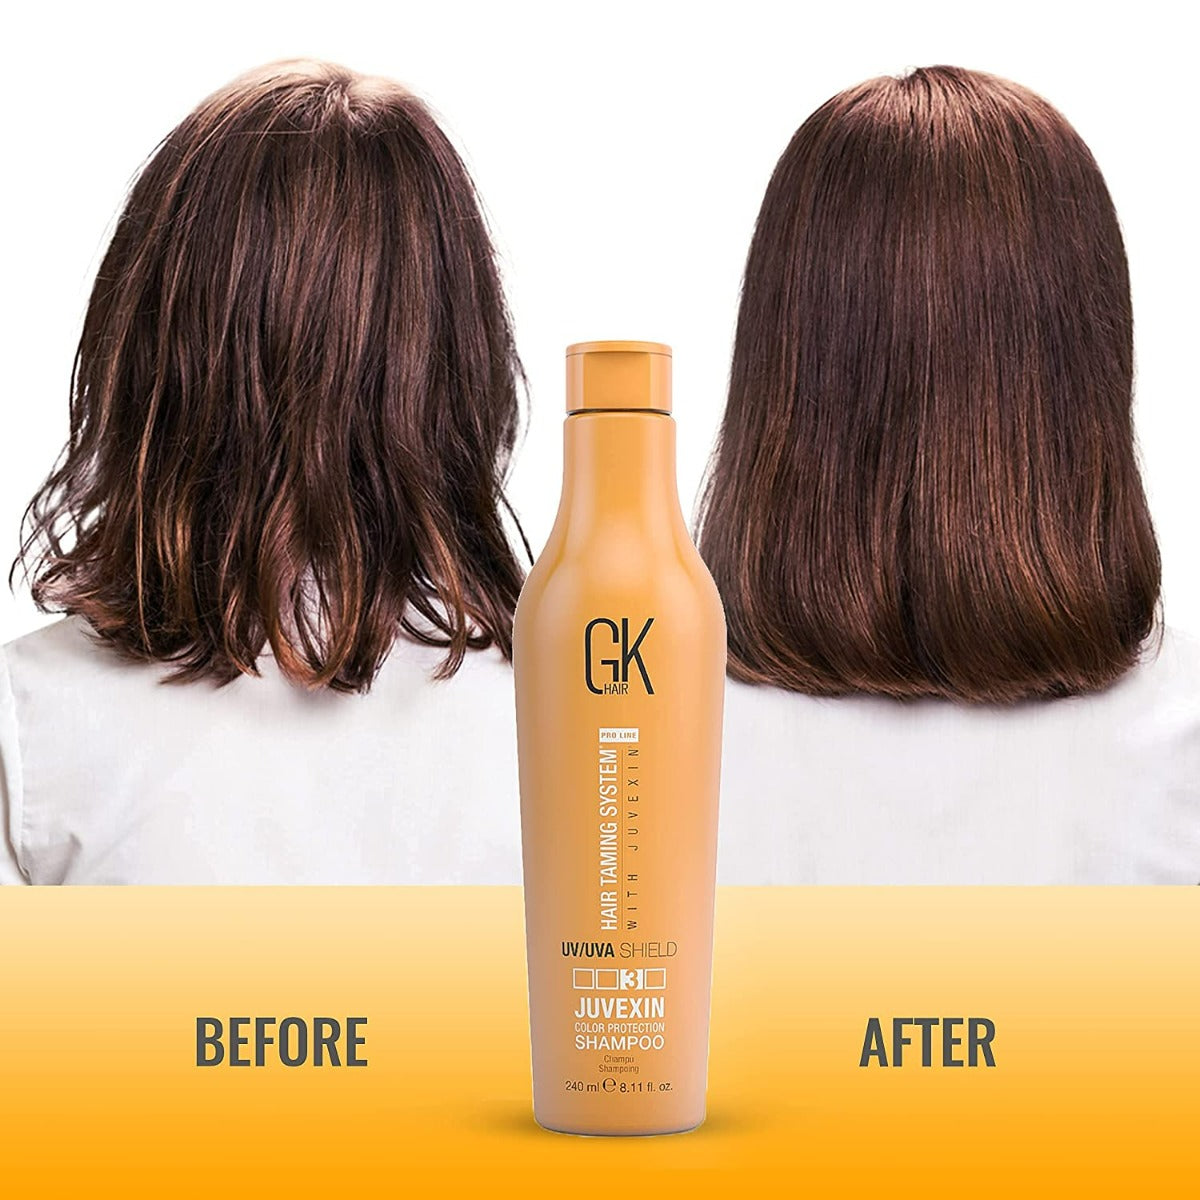 Gk Hair Color Protection Shield Shampoo (240ml)